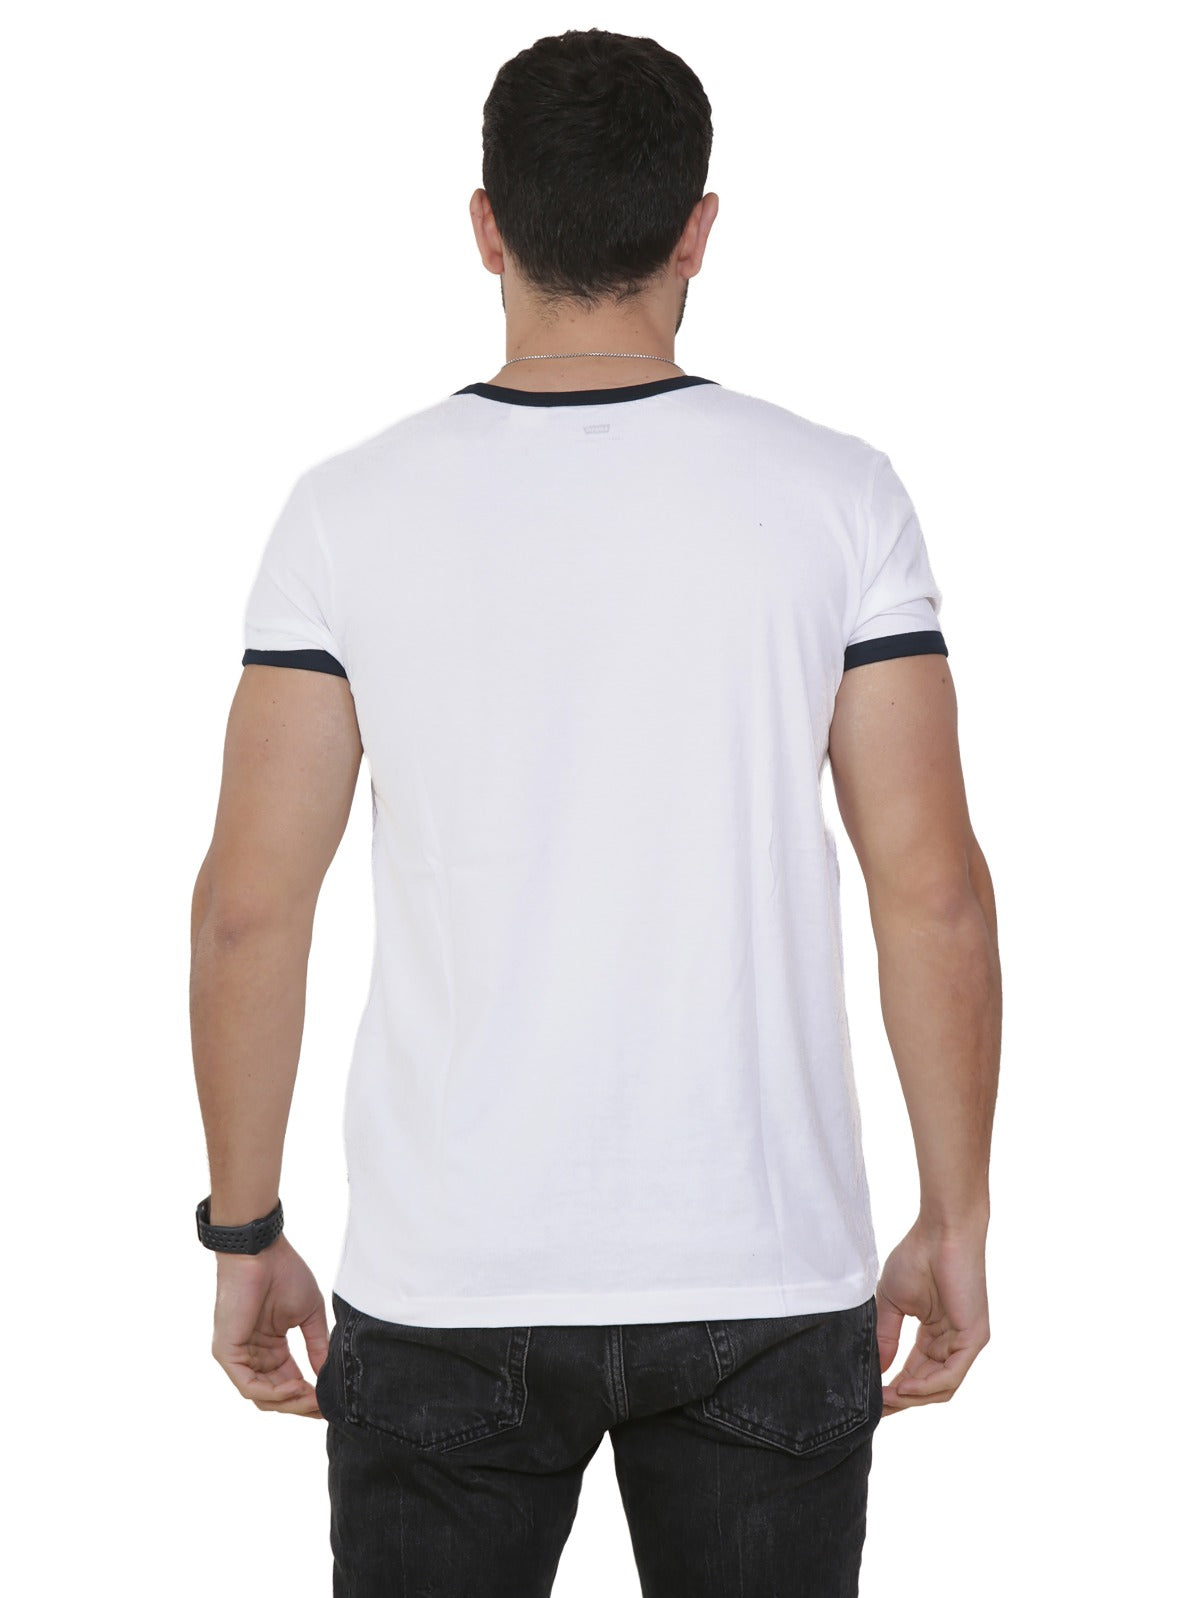 LEVIS TSHIRT LOGO Levis Mens Short Sleeve T Shirt S-XL GUEST BRAND RAWDENIM